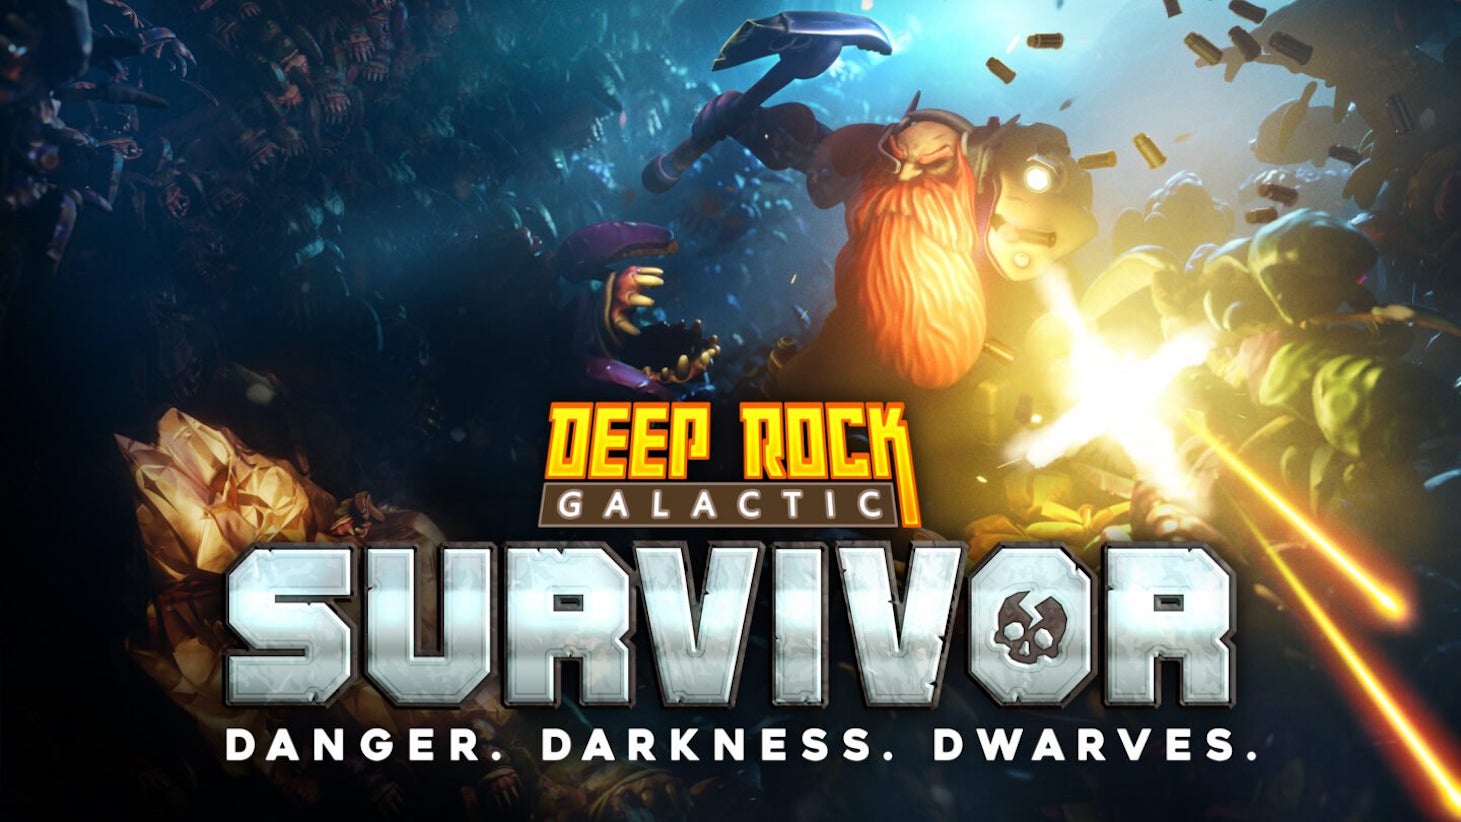 A sci-fi Dawrf bashes aliens in Deep Rock Galactic Survivor